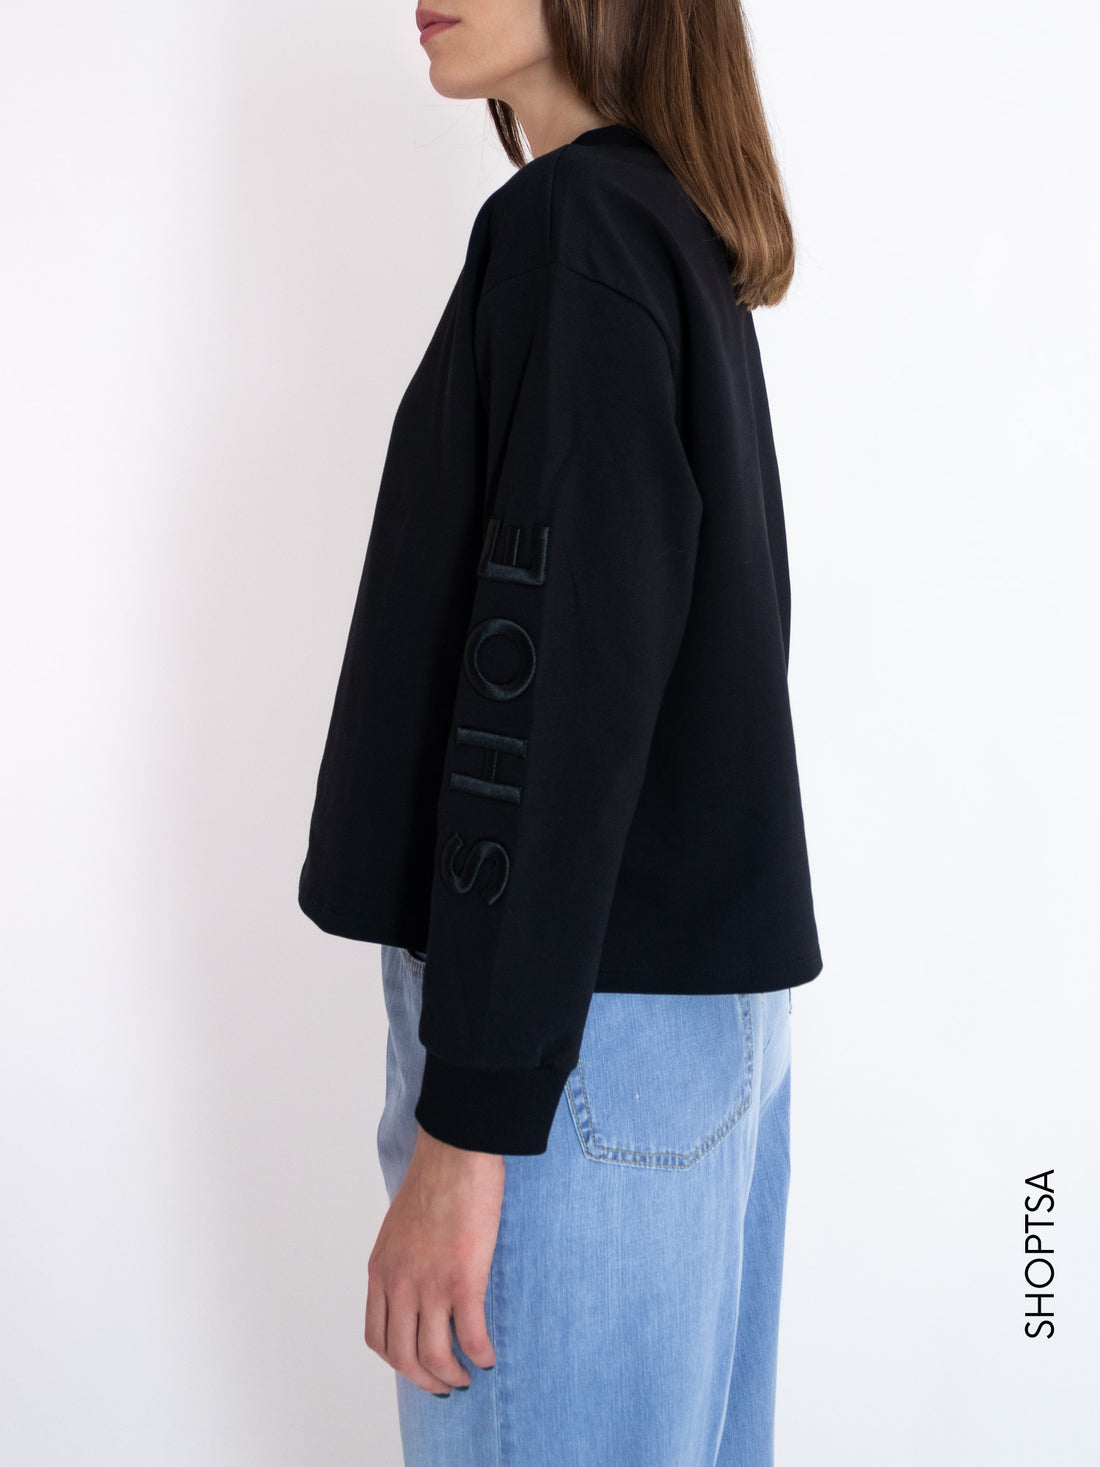 Lightweight black sweatshirt - SHOE